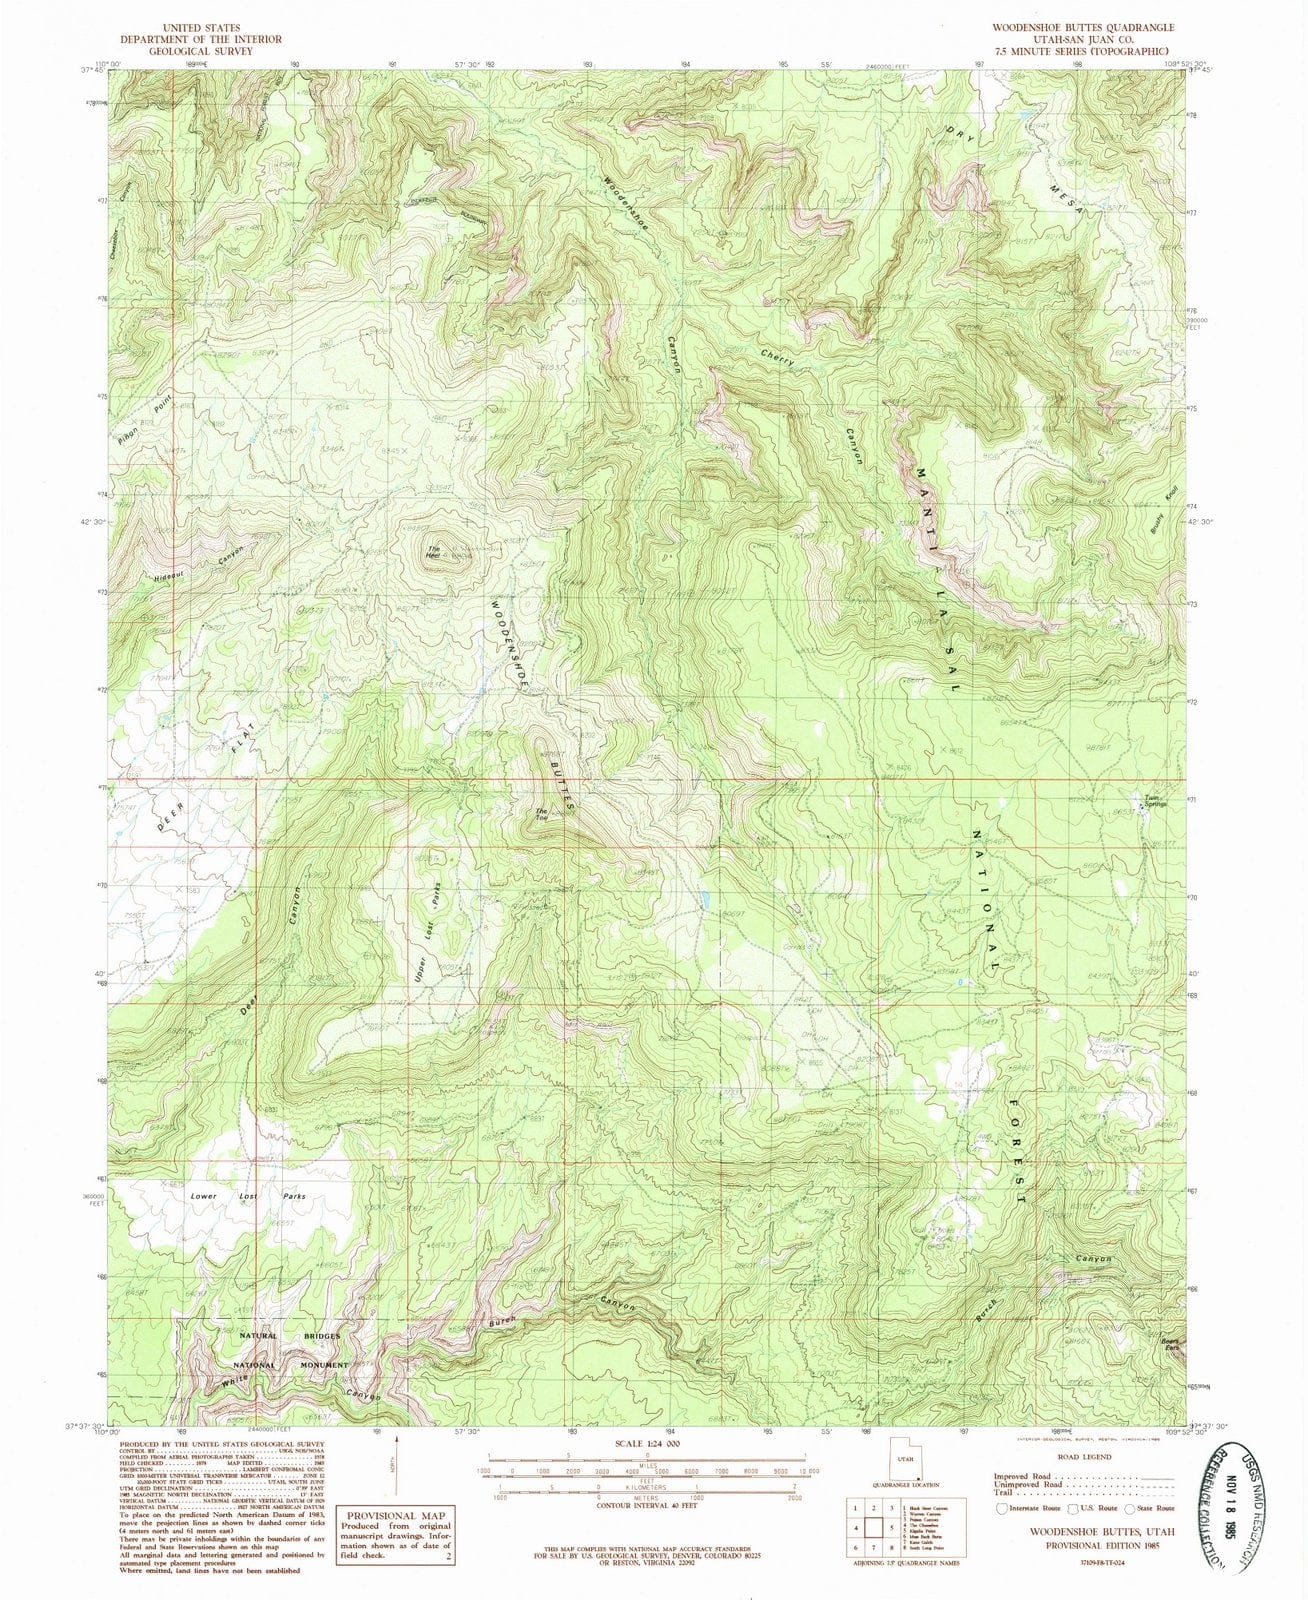 1985 Woodenshoe Buttes, UT - Utah - USGS Topographic Map